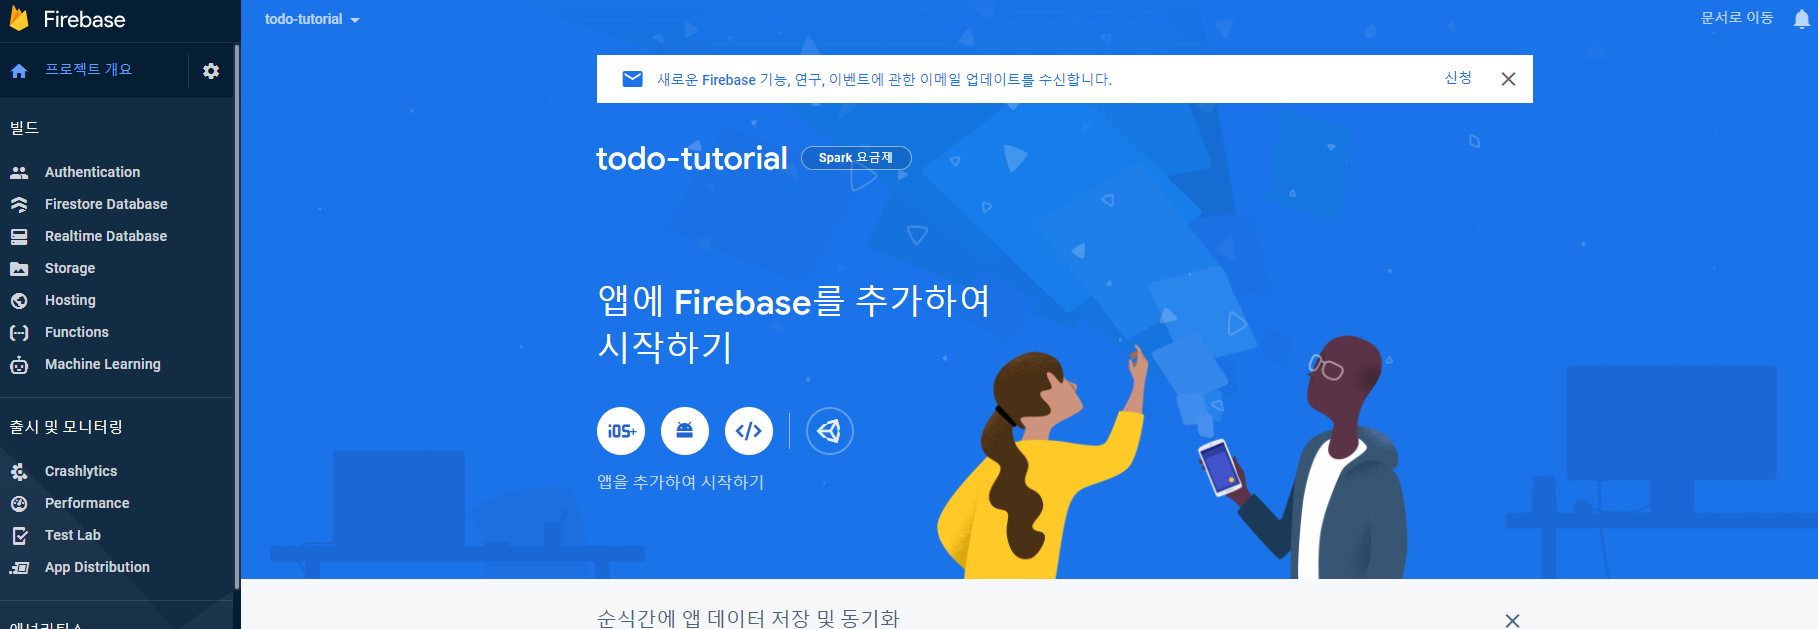 firebase-tutorial-4